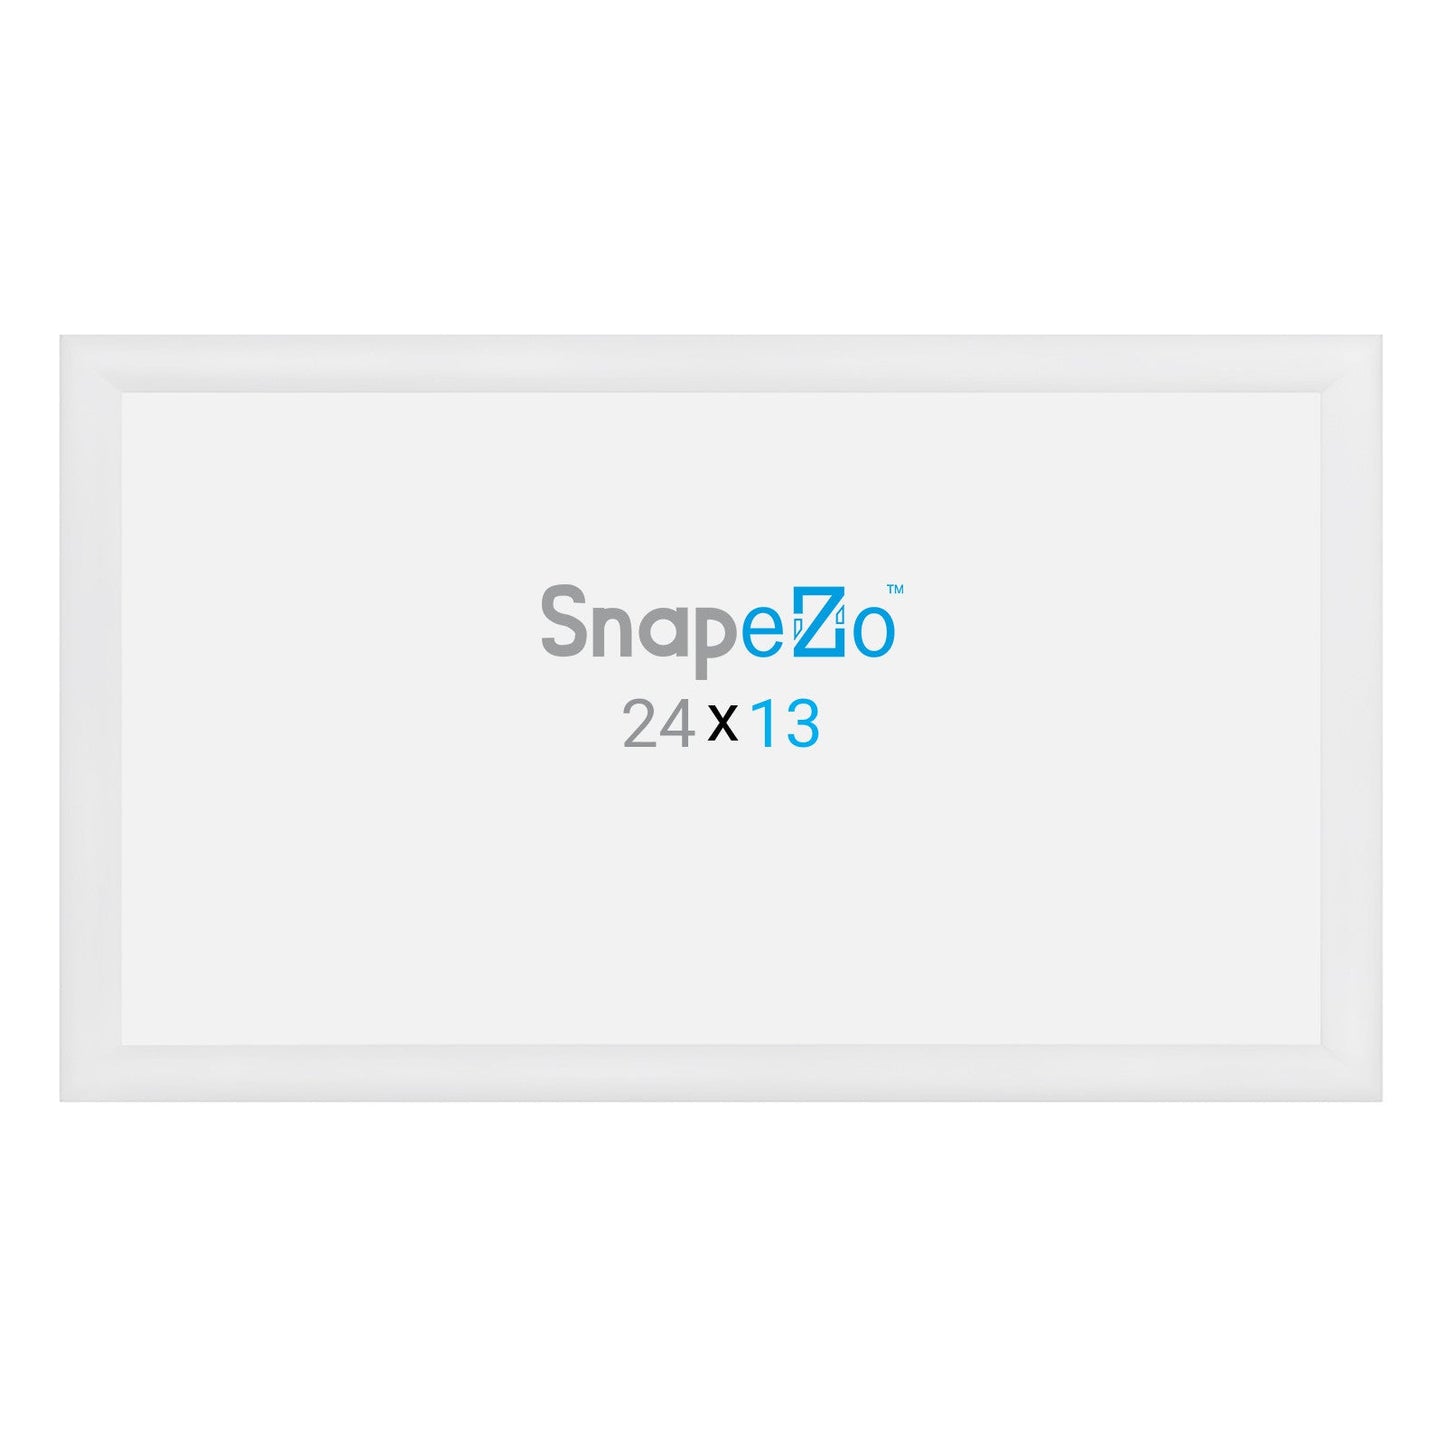 13x24 White SnapeZo® Snap Frame - 1.2" Profile - Snap Frames Direct